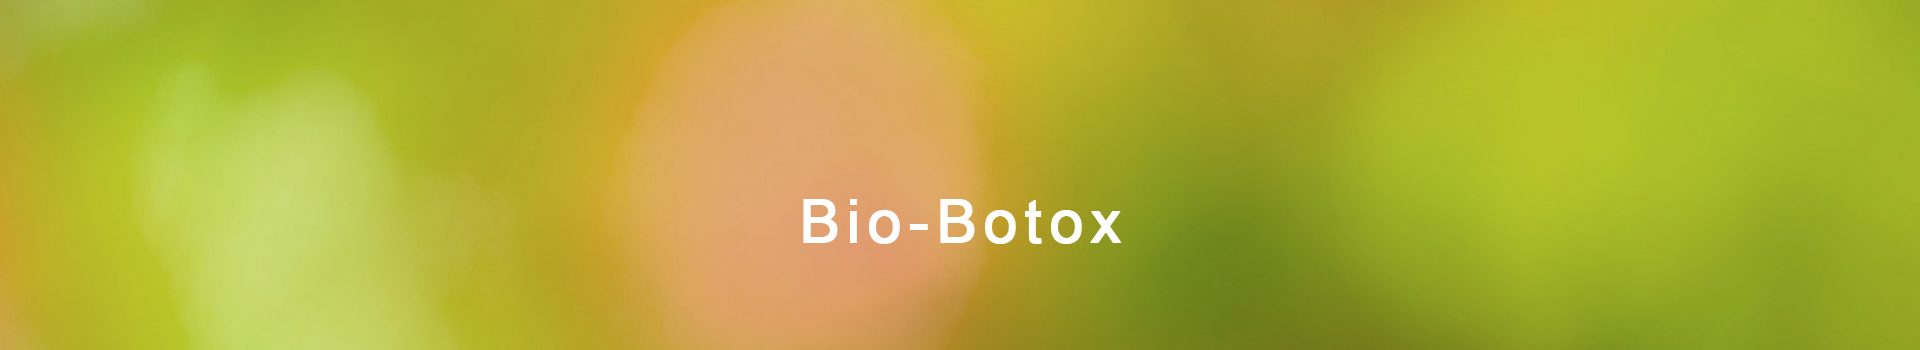 Bio-Botox-Headerbild